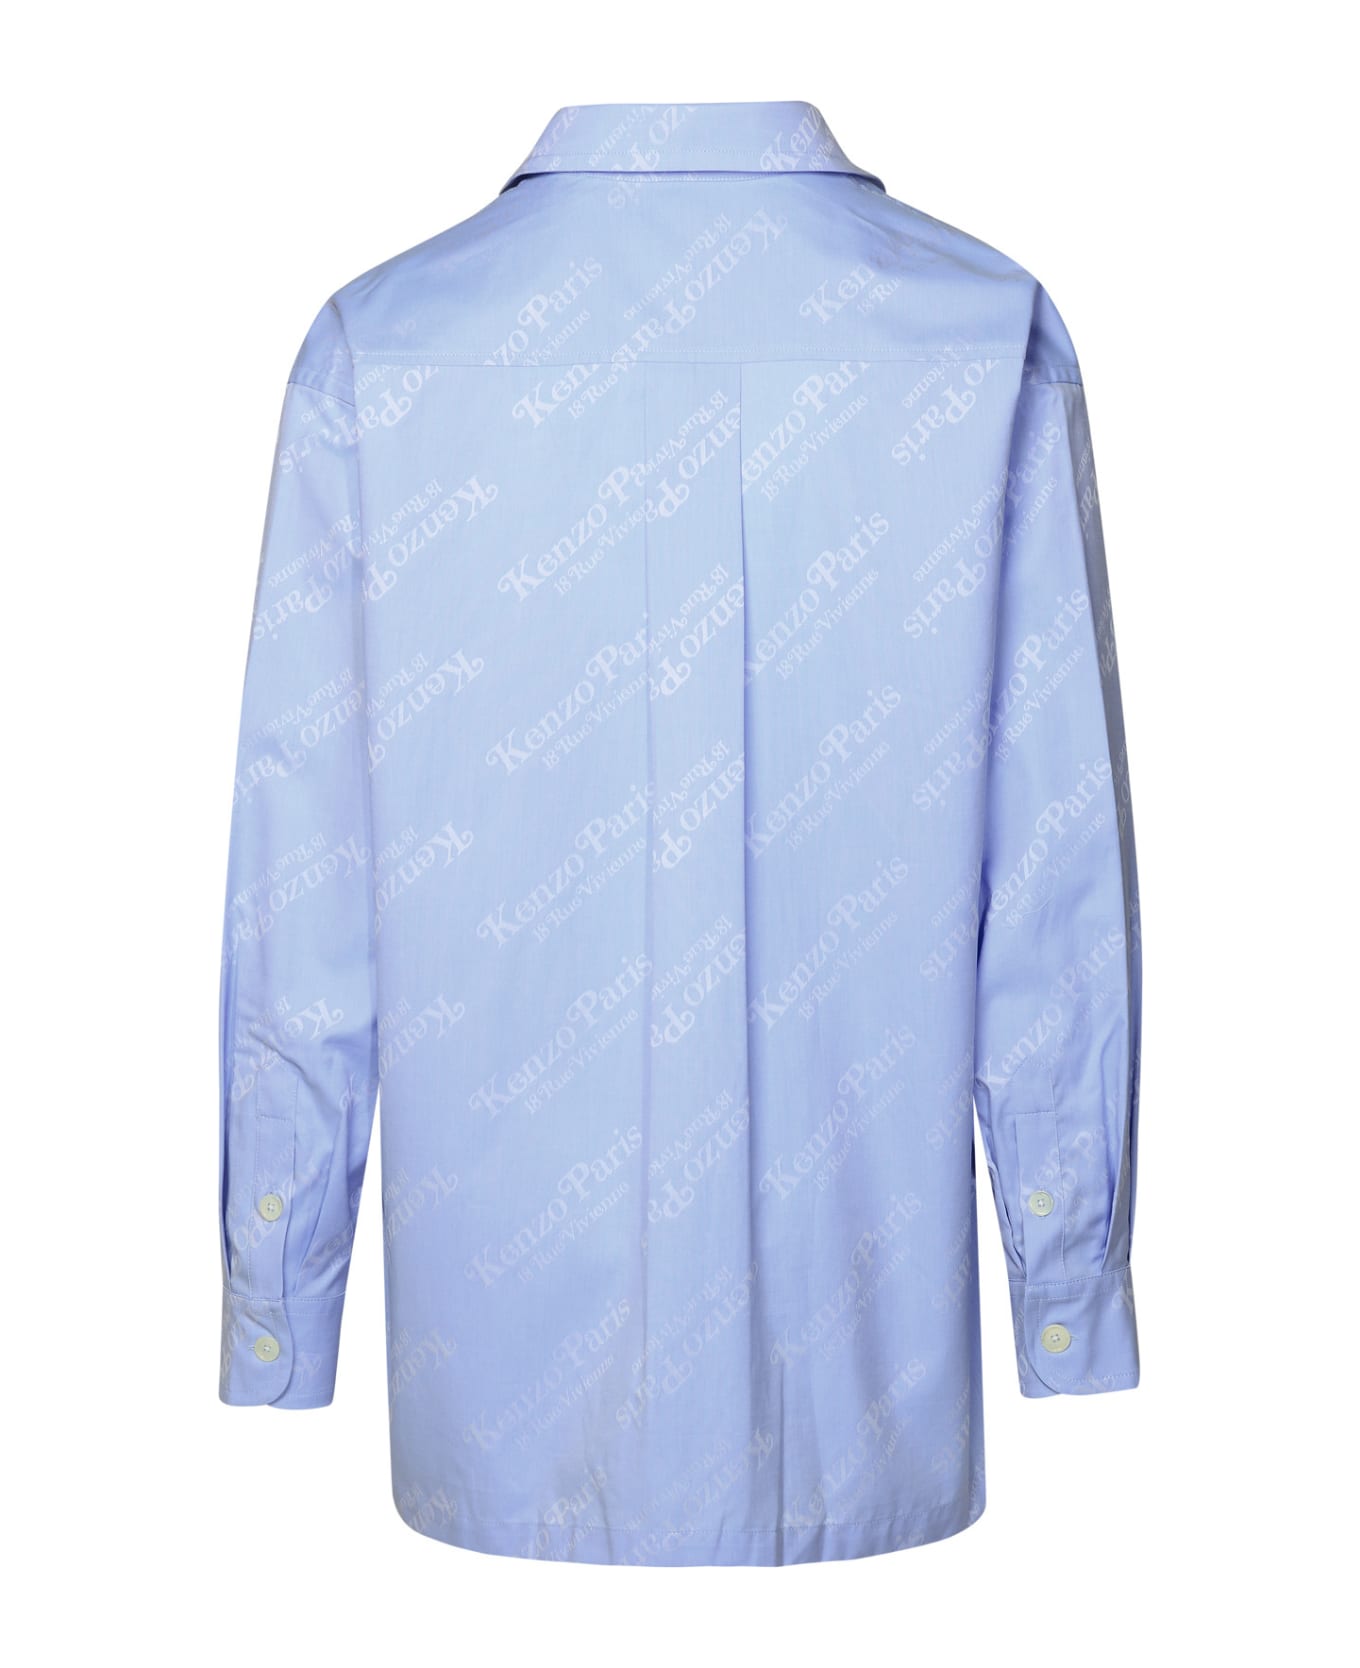 Kenzo ' By Verdy' Cotton Shirt - Light Blue